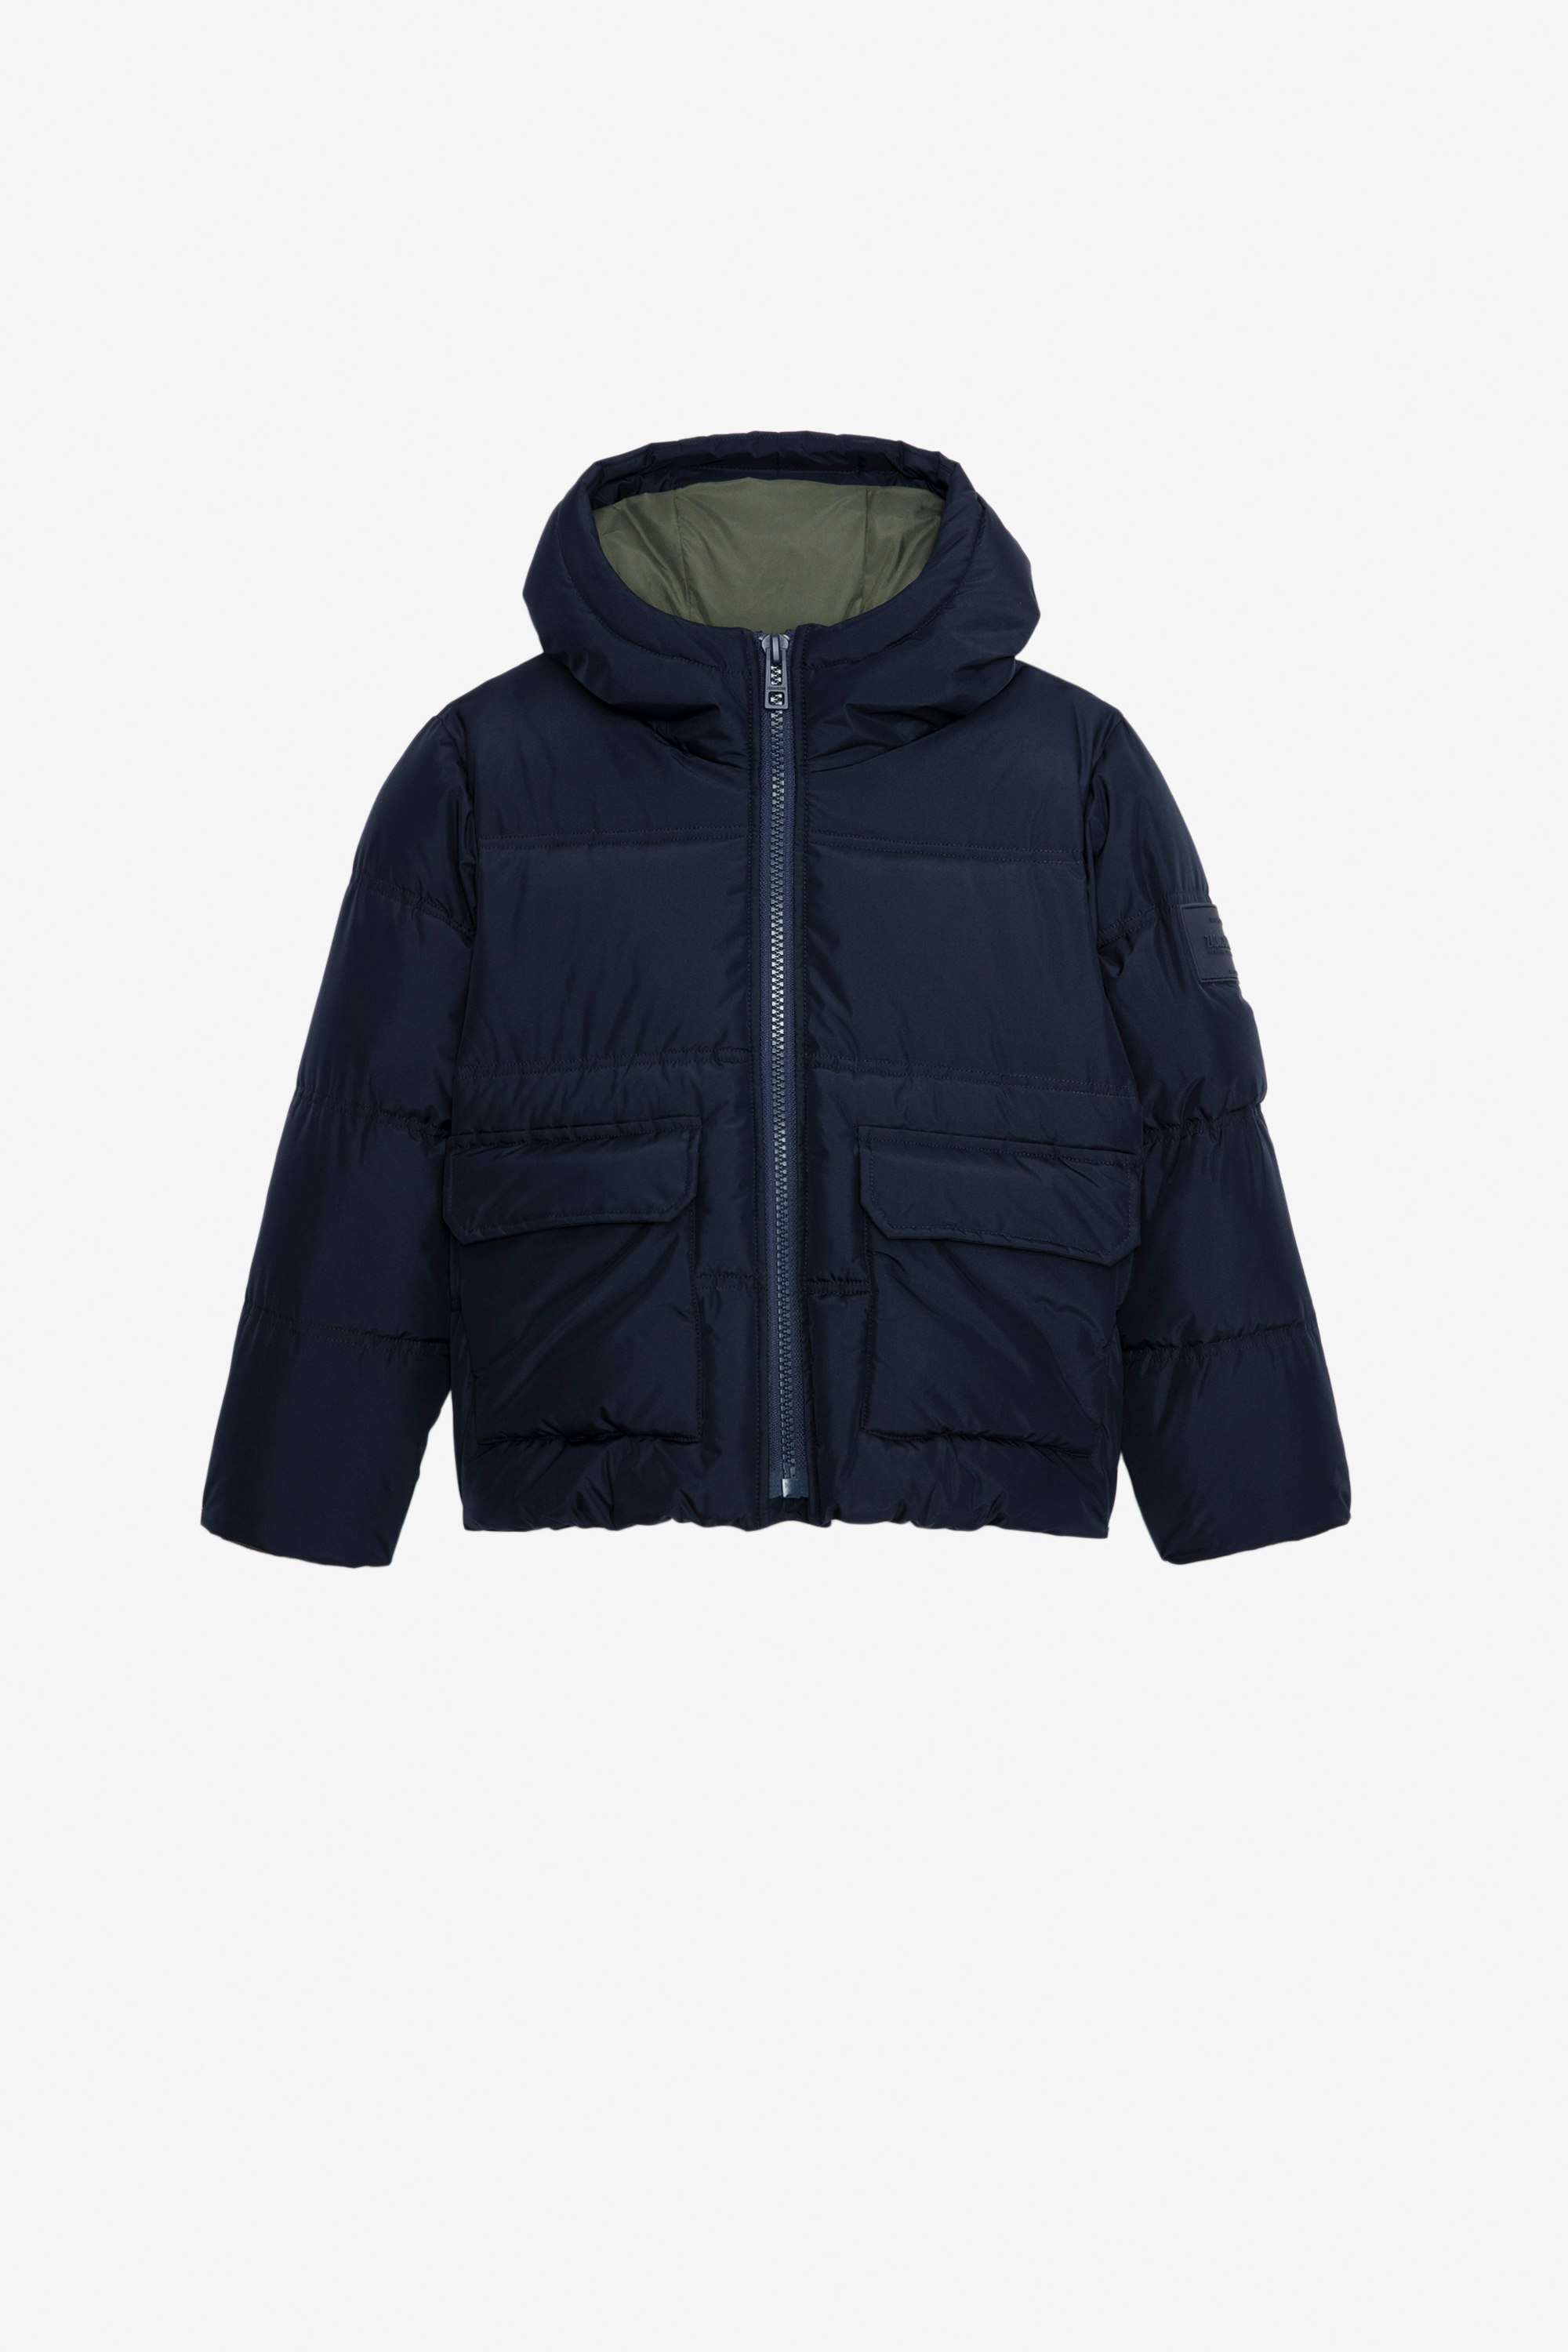 Dano Boys’ Puffer Coat - Boys’ navy blue water-repellent hooded puffer coat.